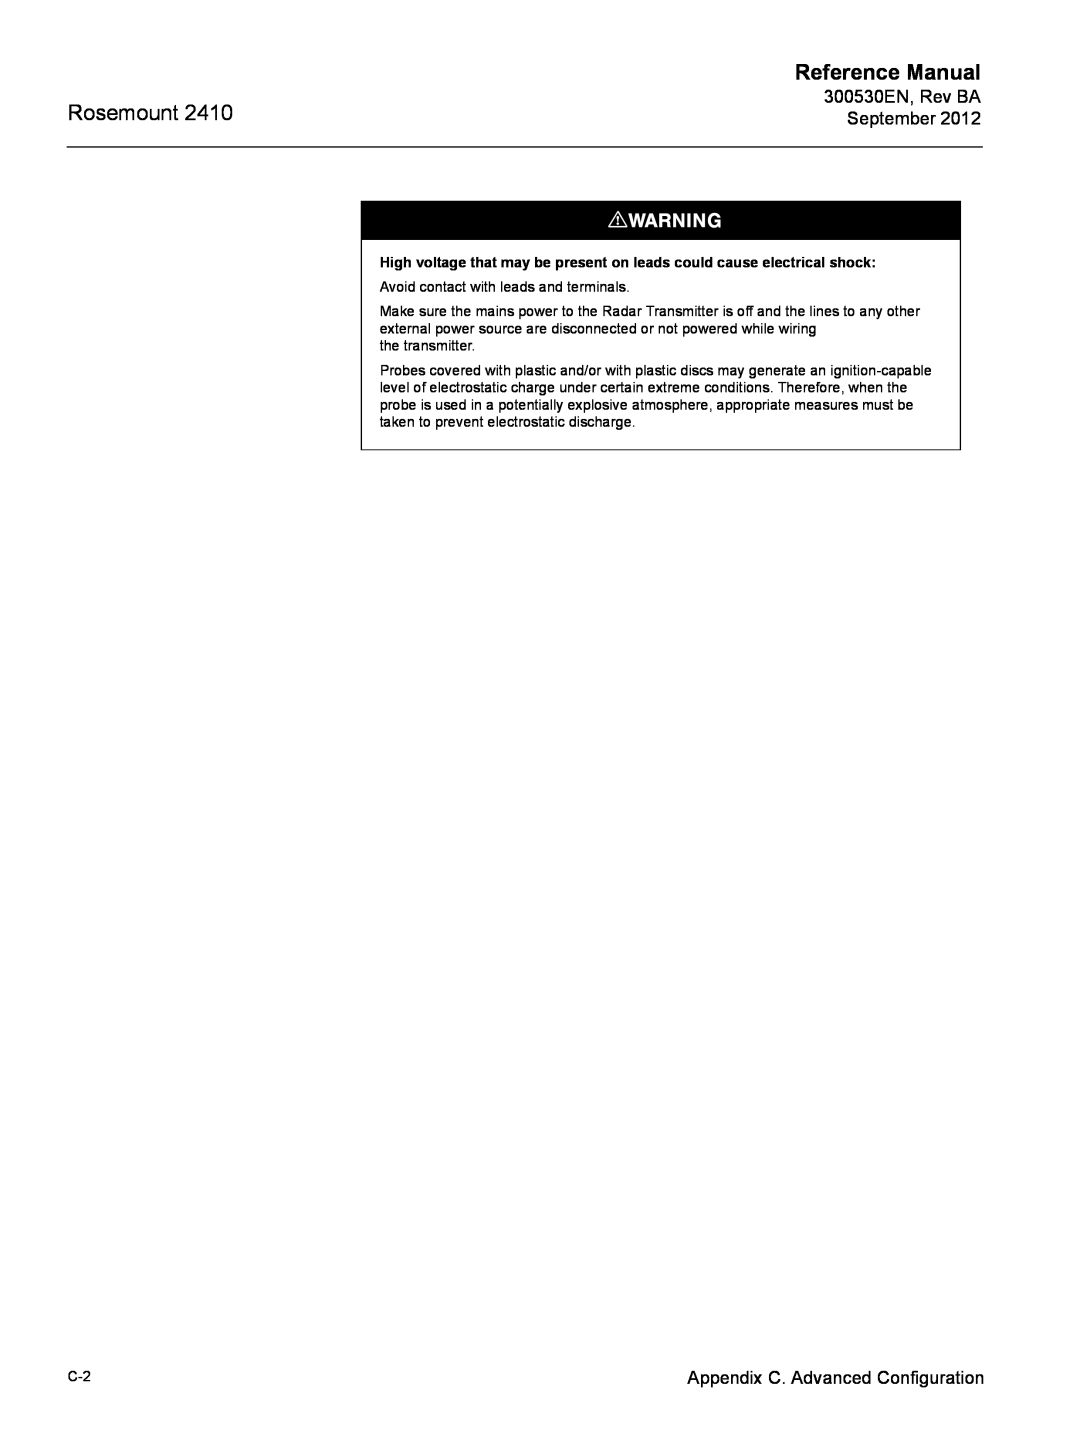 Emerson Process Management Rosemount 2410 manual Reference Manual 